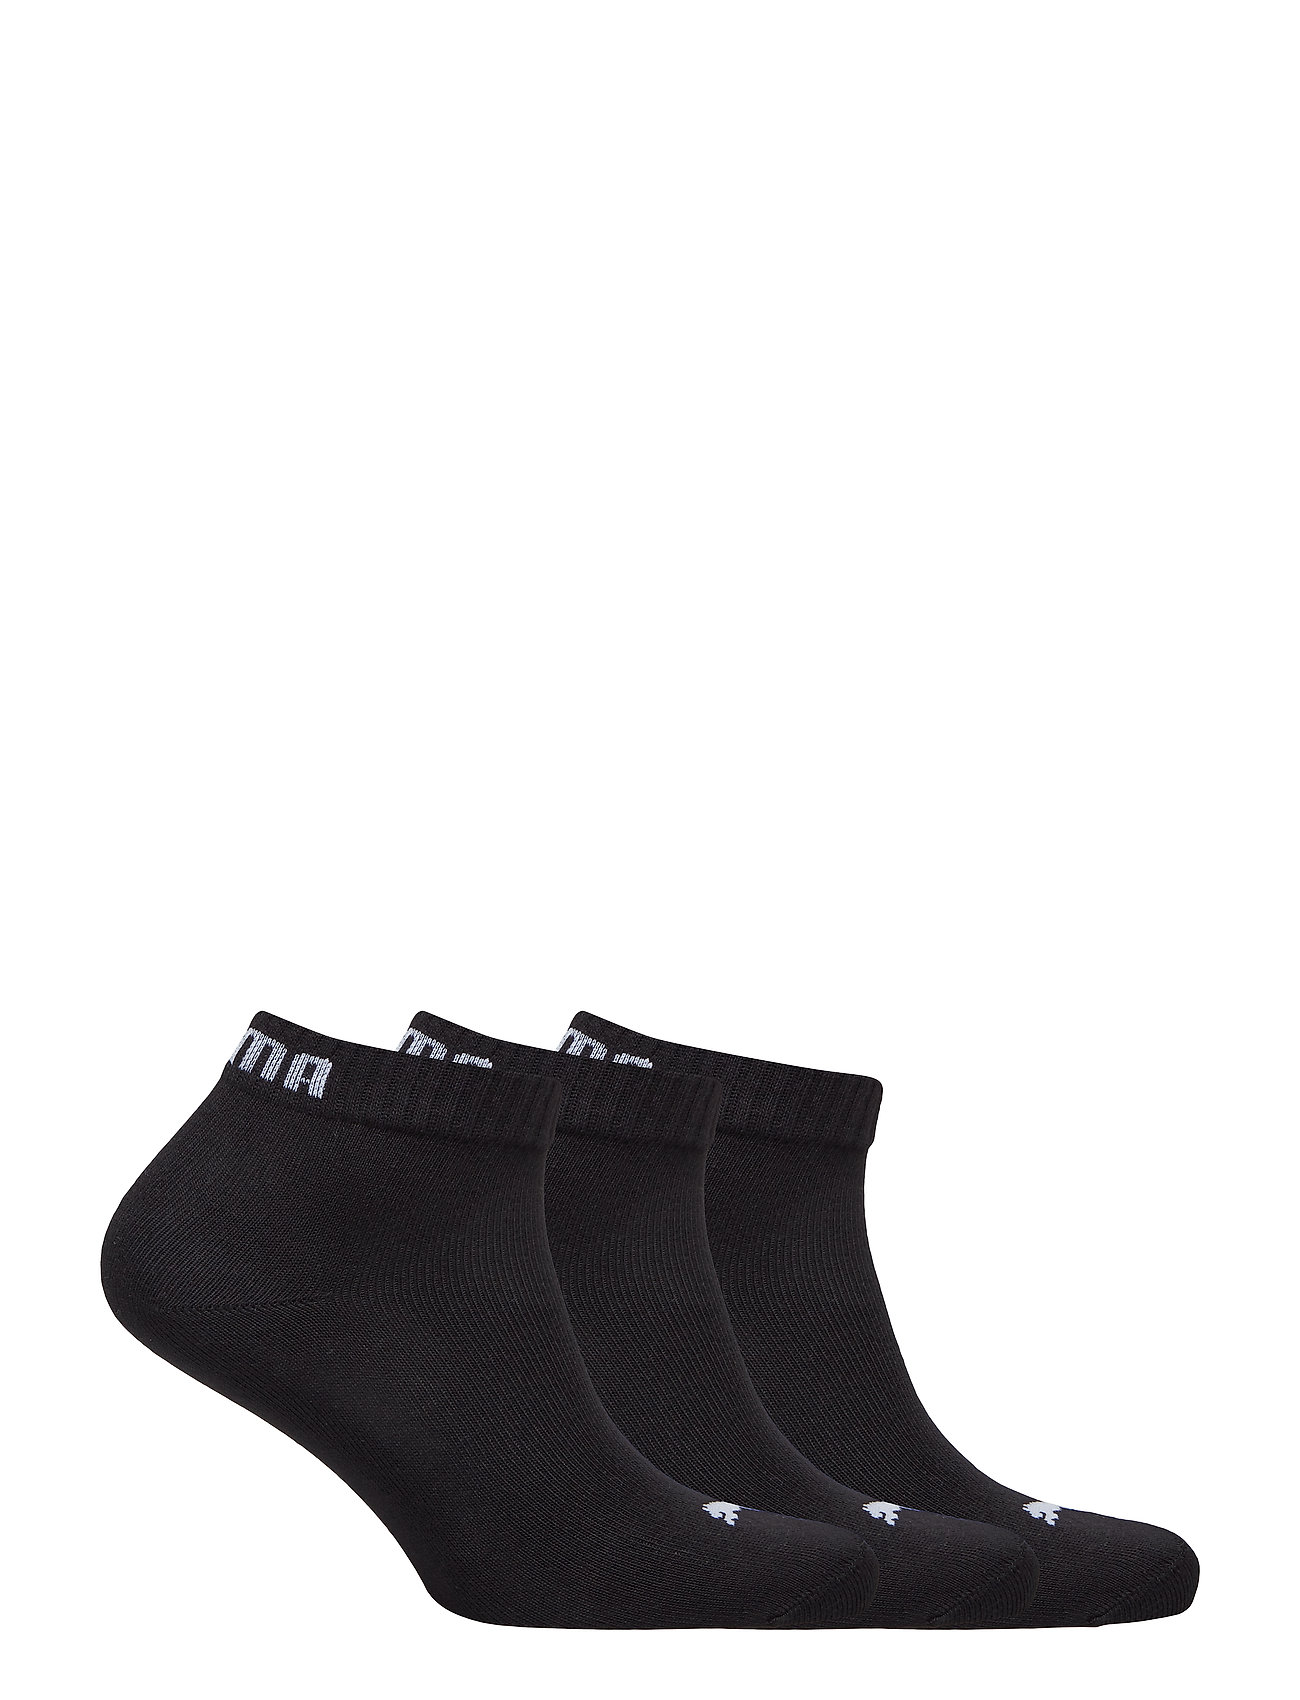 PUMA - PUMA UNISEX QUARTER PLAIN 3P - multipack socks - black - 1